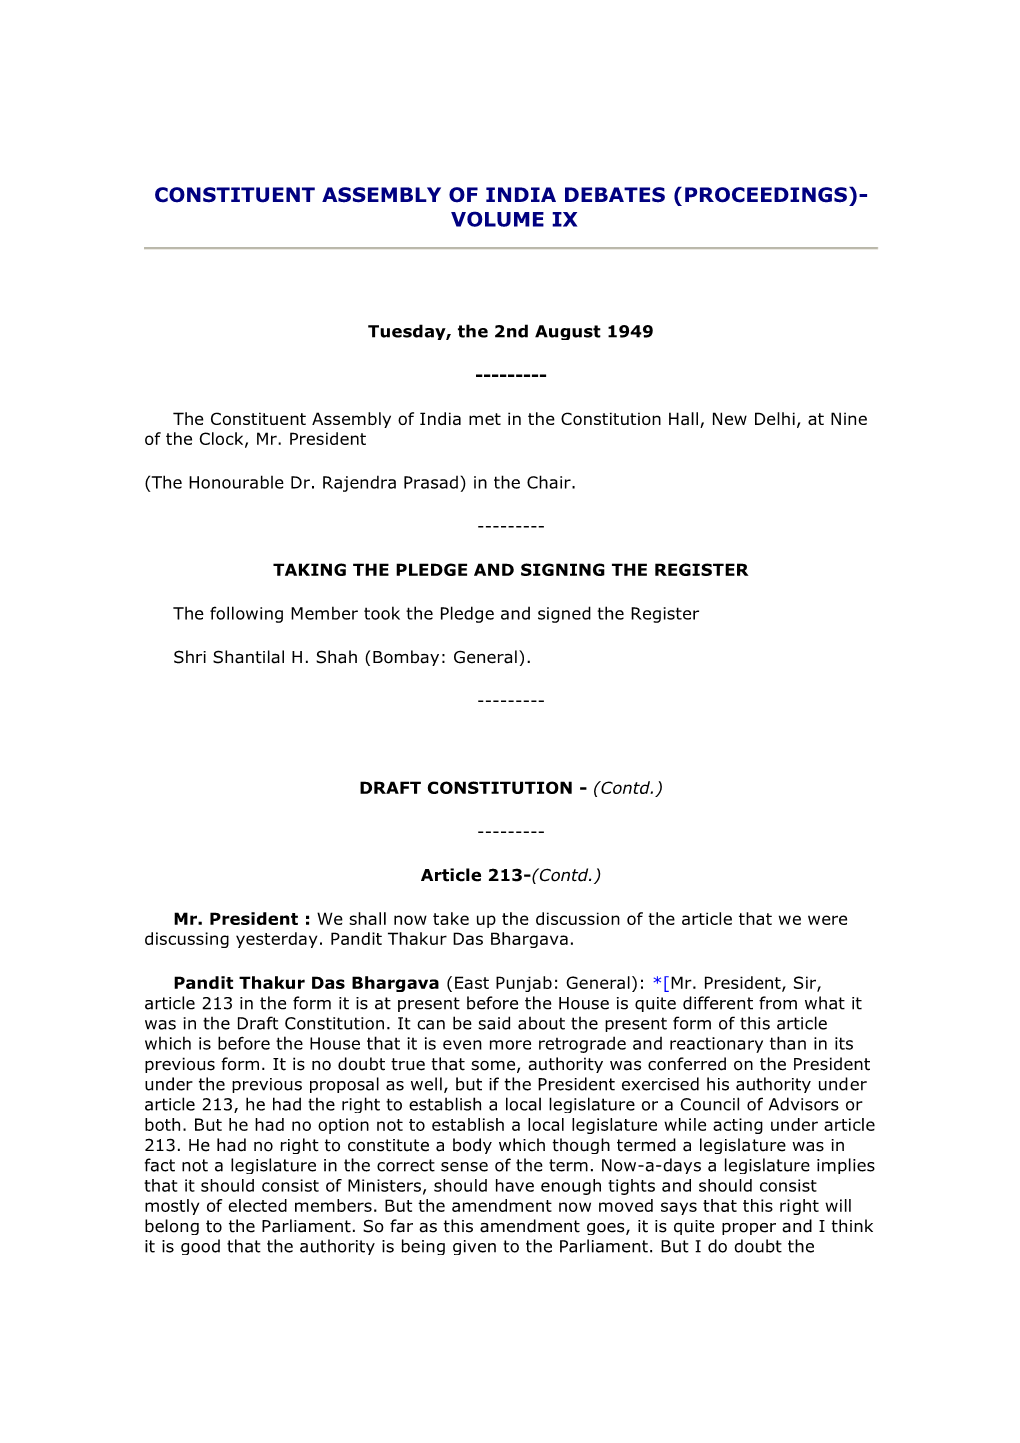 Constituent Assembly of India Debates (Proceedings)- Volume Ix